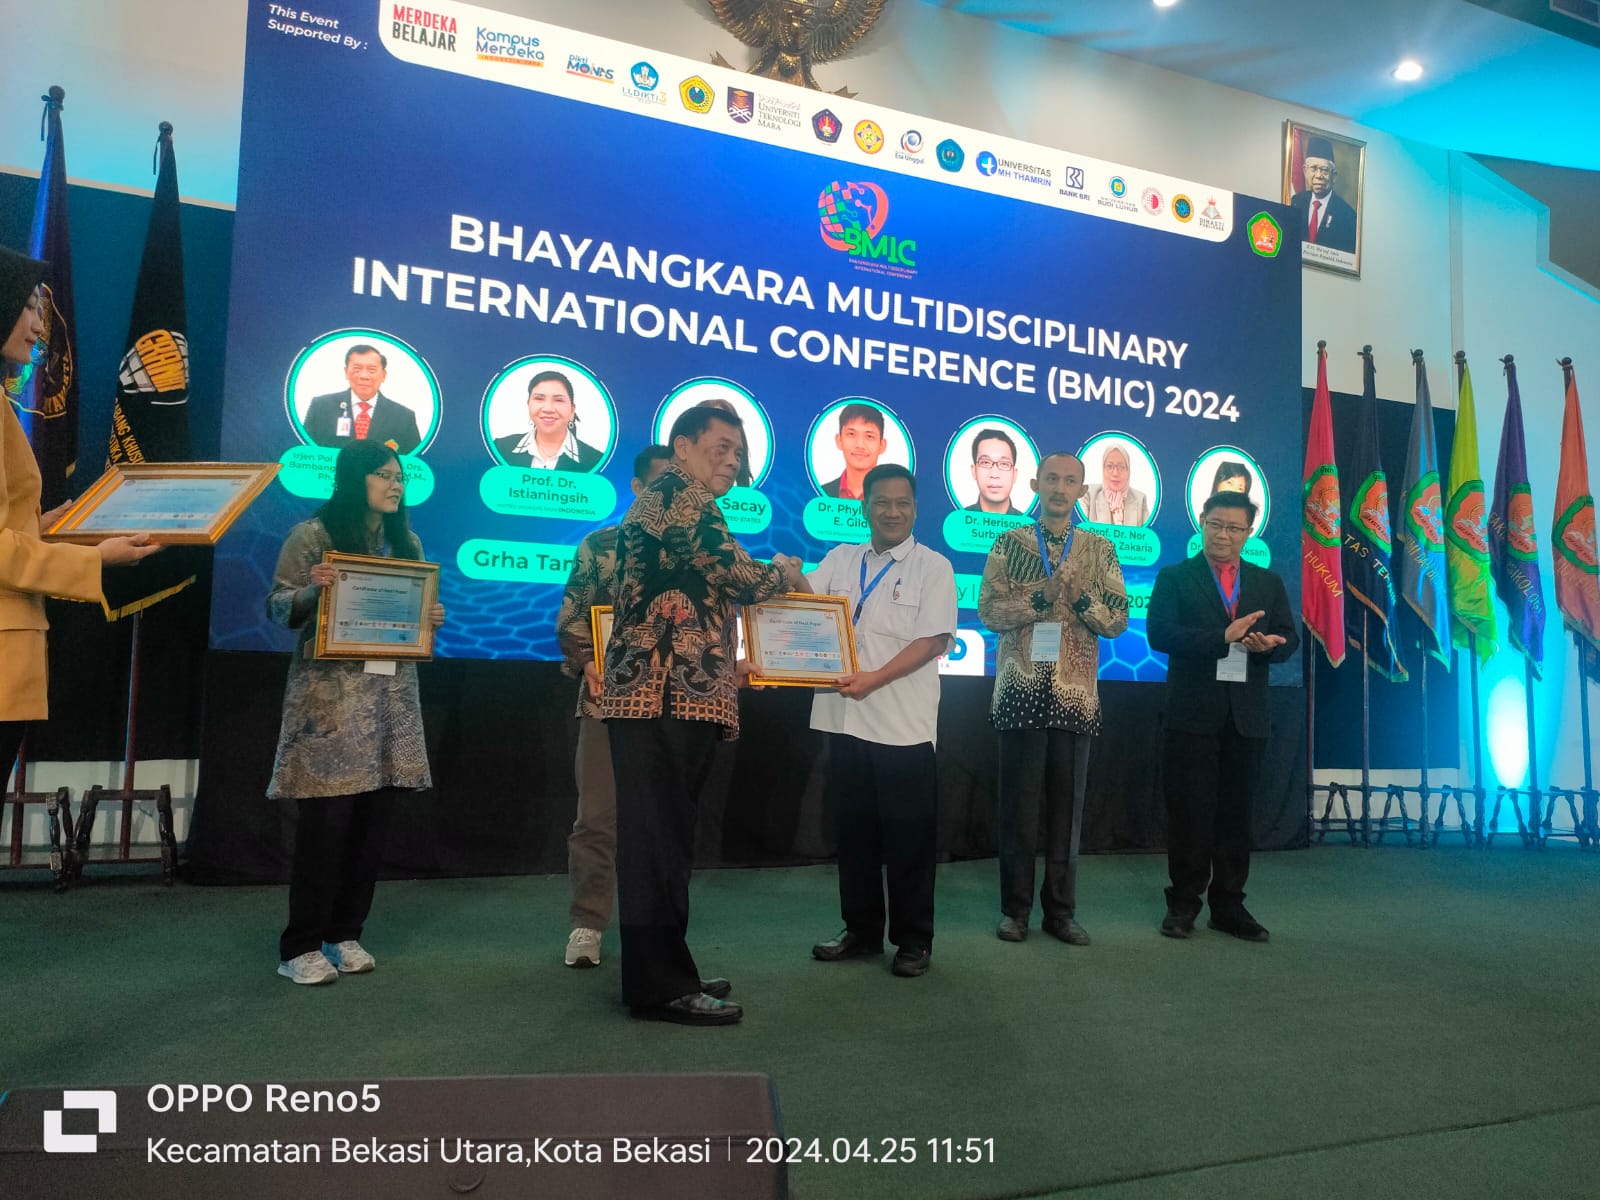 Best Paper di Bhayangkara Multidisciplinary International Conference (BMIC) 2024